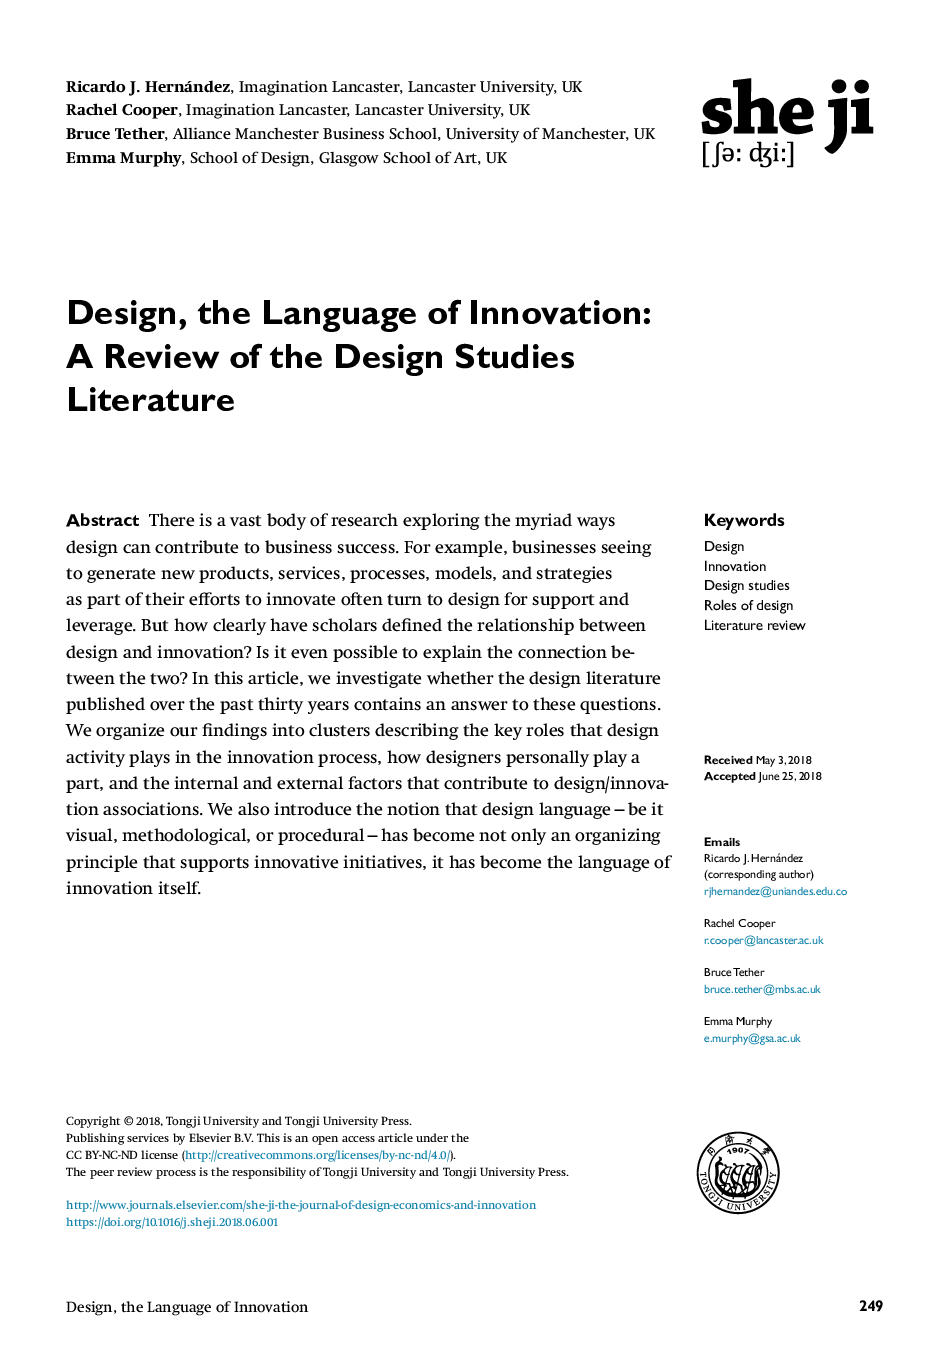 طراحی، زبان نوآوری: بررسی ادبیات مطالعات طراحی